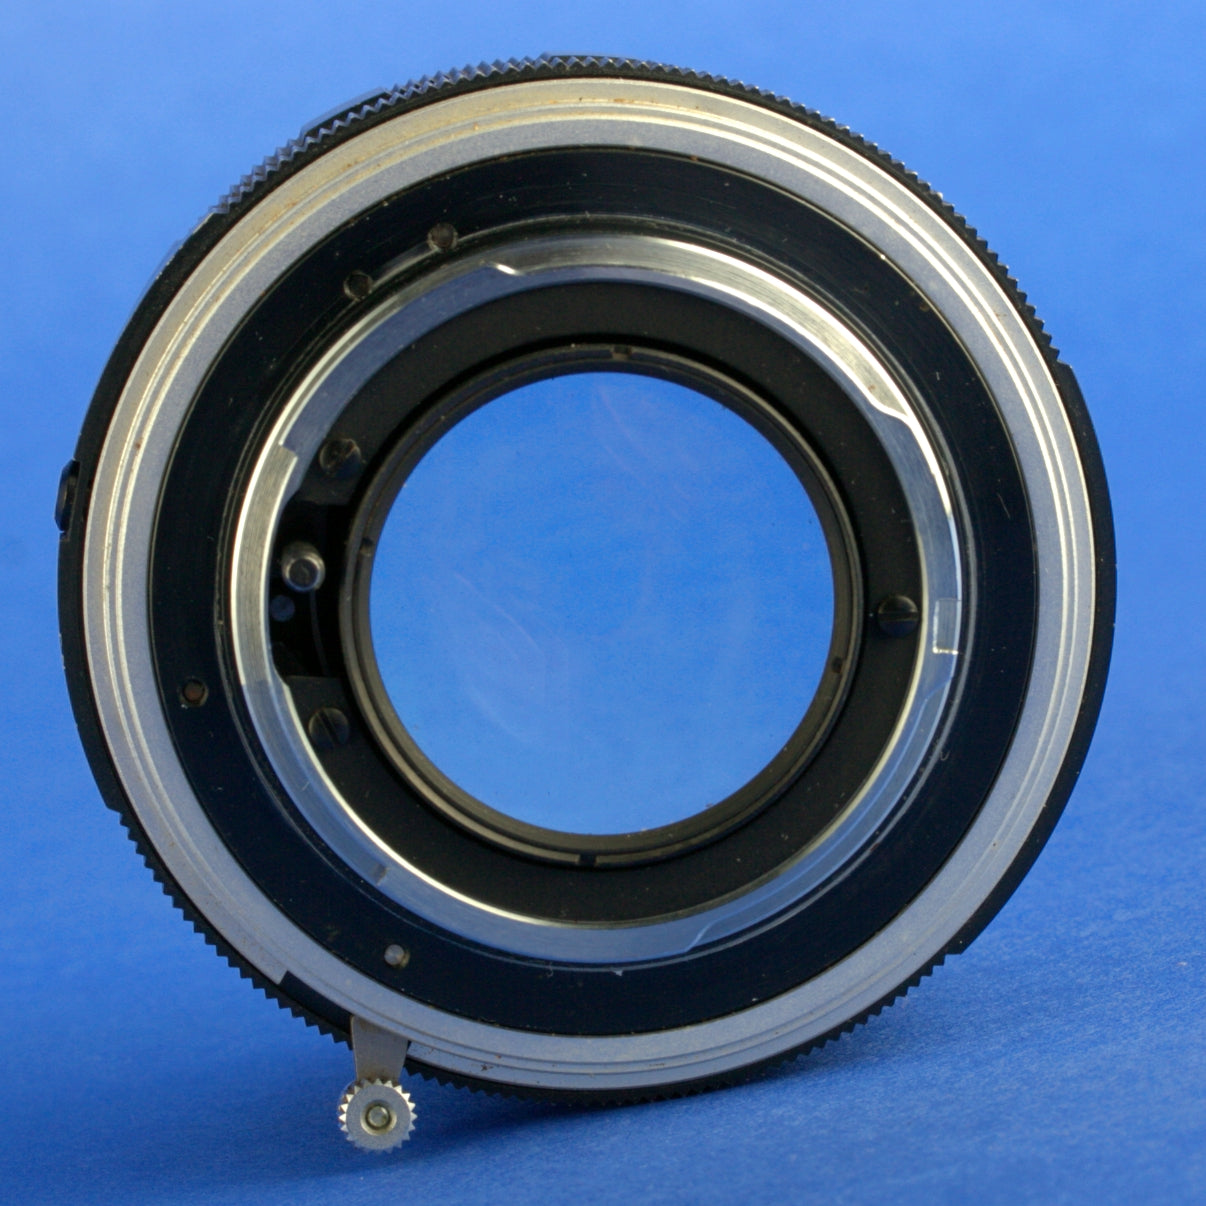 Minolta MC 58mm 1.4 Auto-Rokkor PF Lens